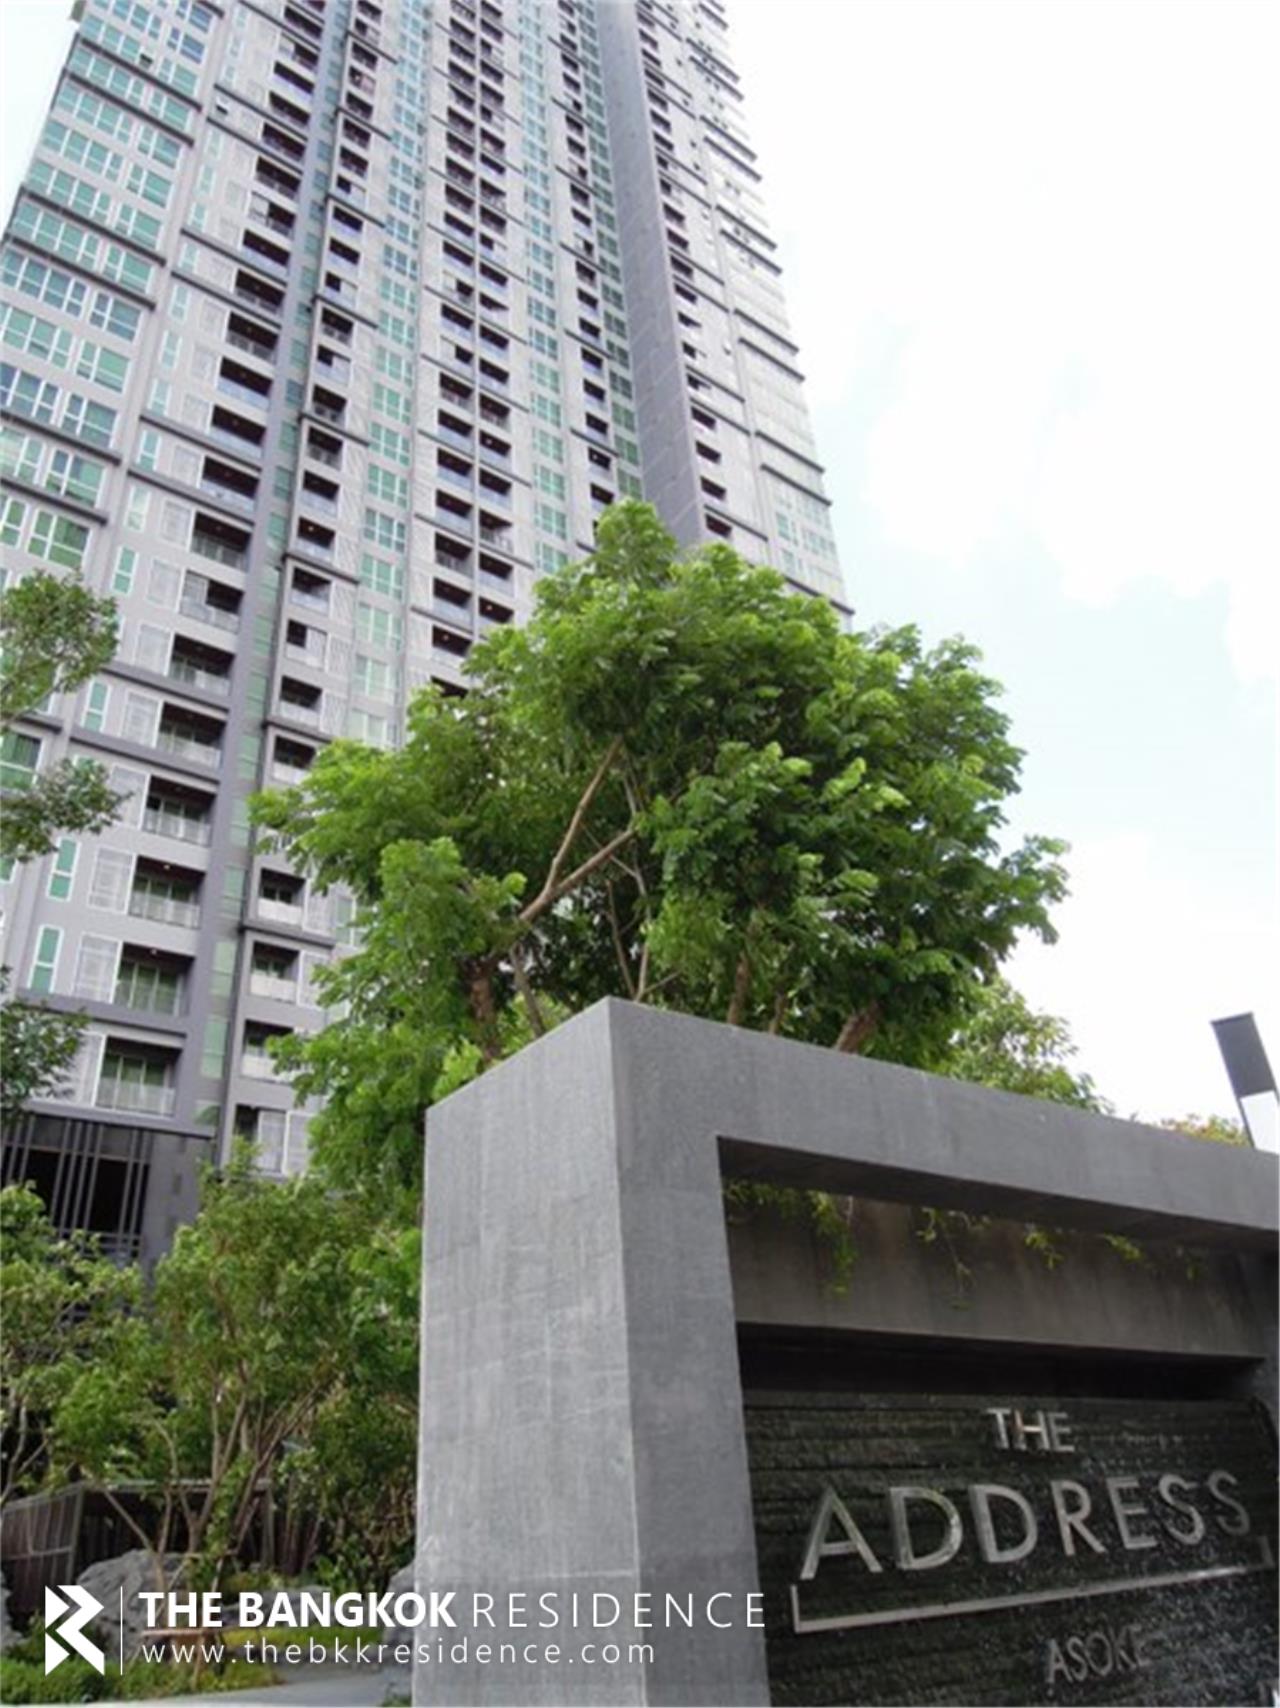 THE BANGKOK RESIDENCE Agency's The Address Asoke BTS Asoke 1 Bed 1 Bath | C1711130481 1